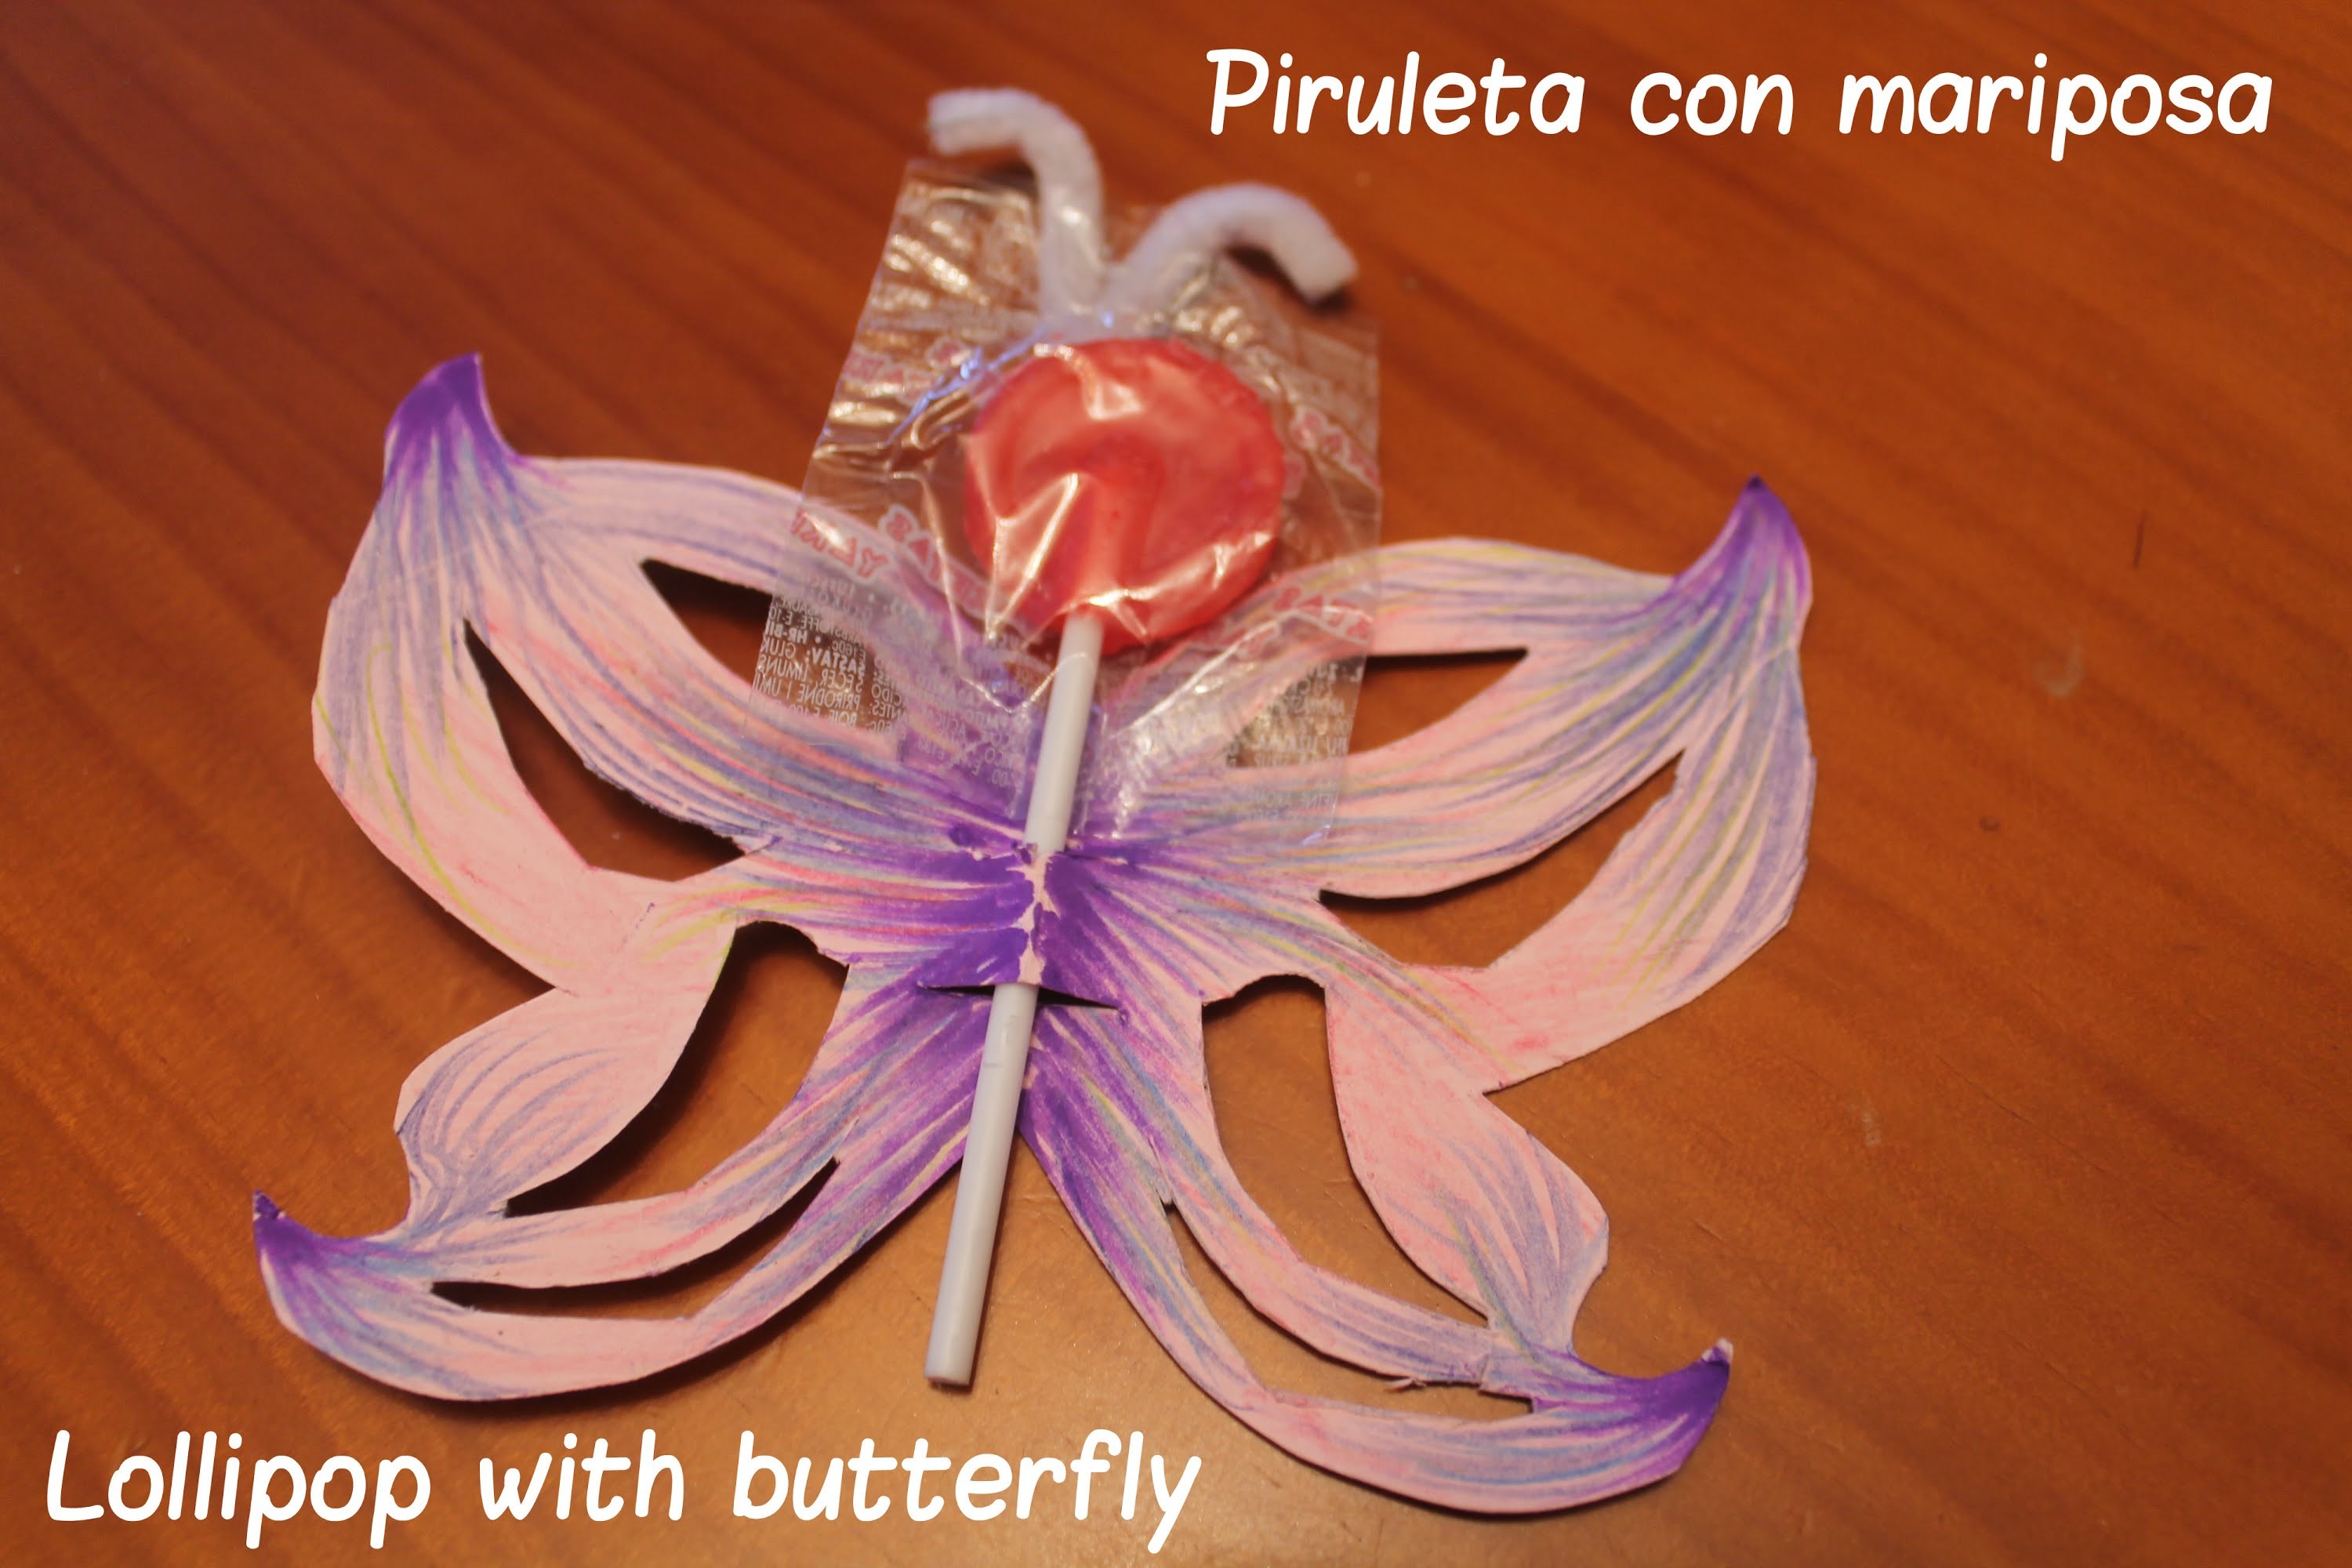 Piruleta con mariposa - Lollipop with butterfly - Ahorradoras.com